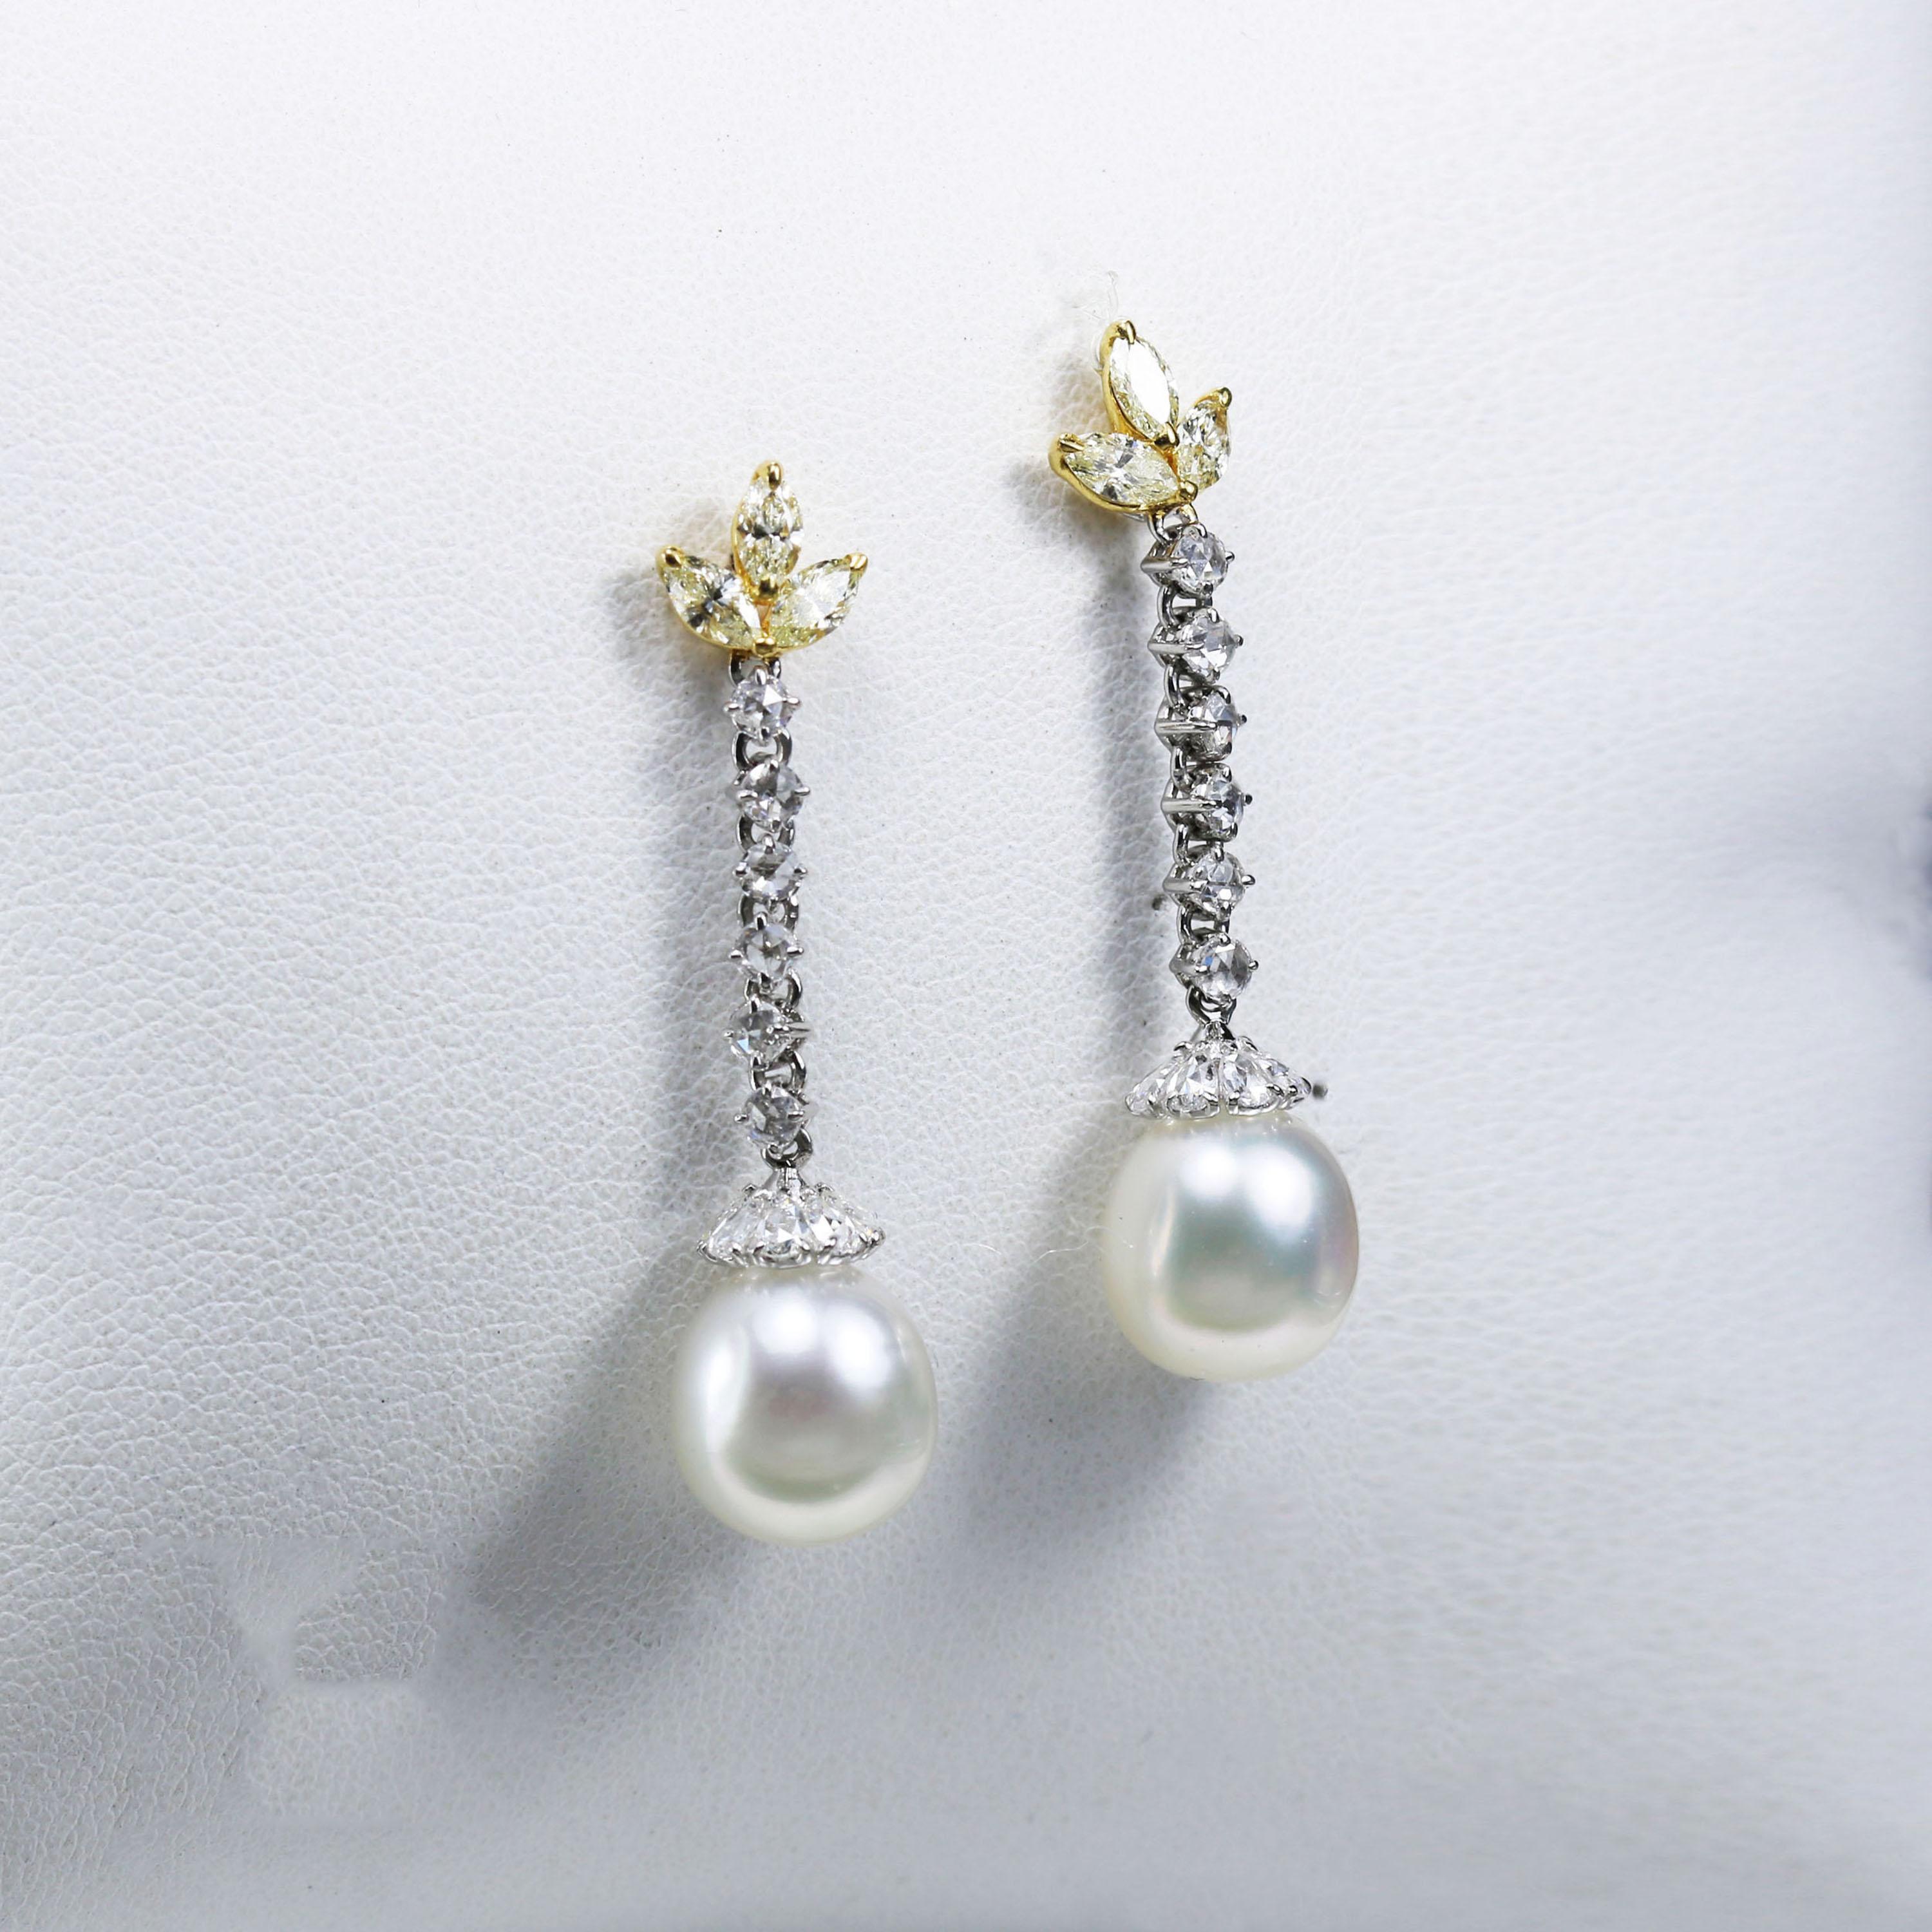 Studio Rêves Diamonds and South Sea Pearls Dangling Earrings in 18 Karat Gold For Sale 2